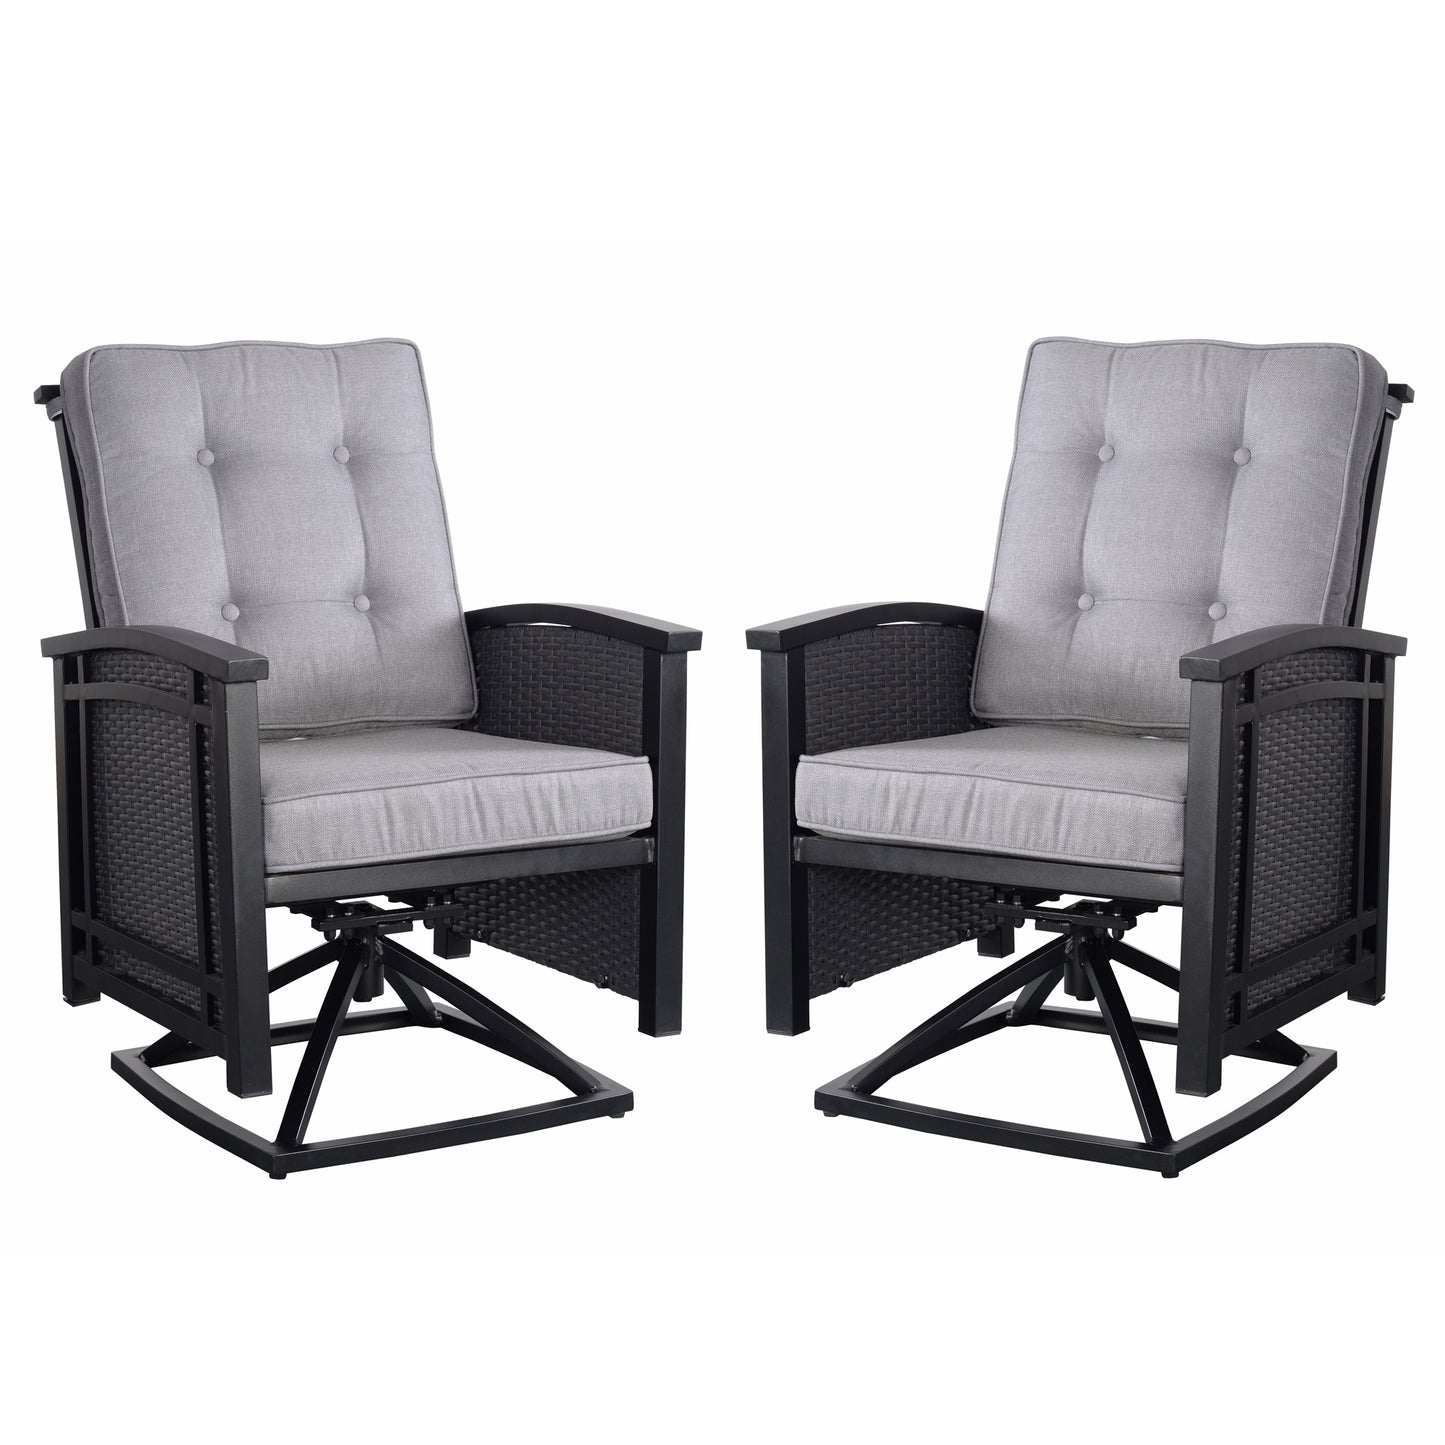 Palmetto Aluminum Swivel Chair Set of 2 - Black/Gray